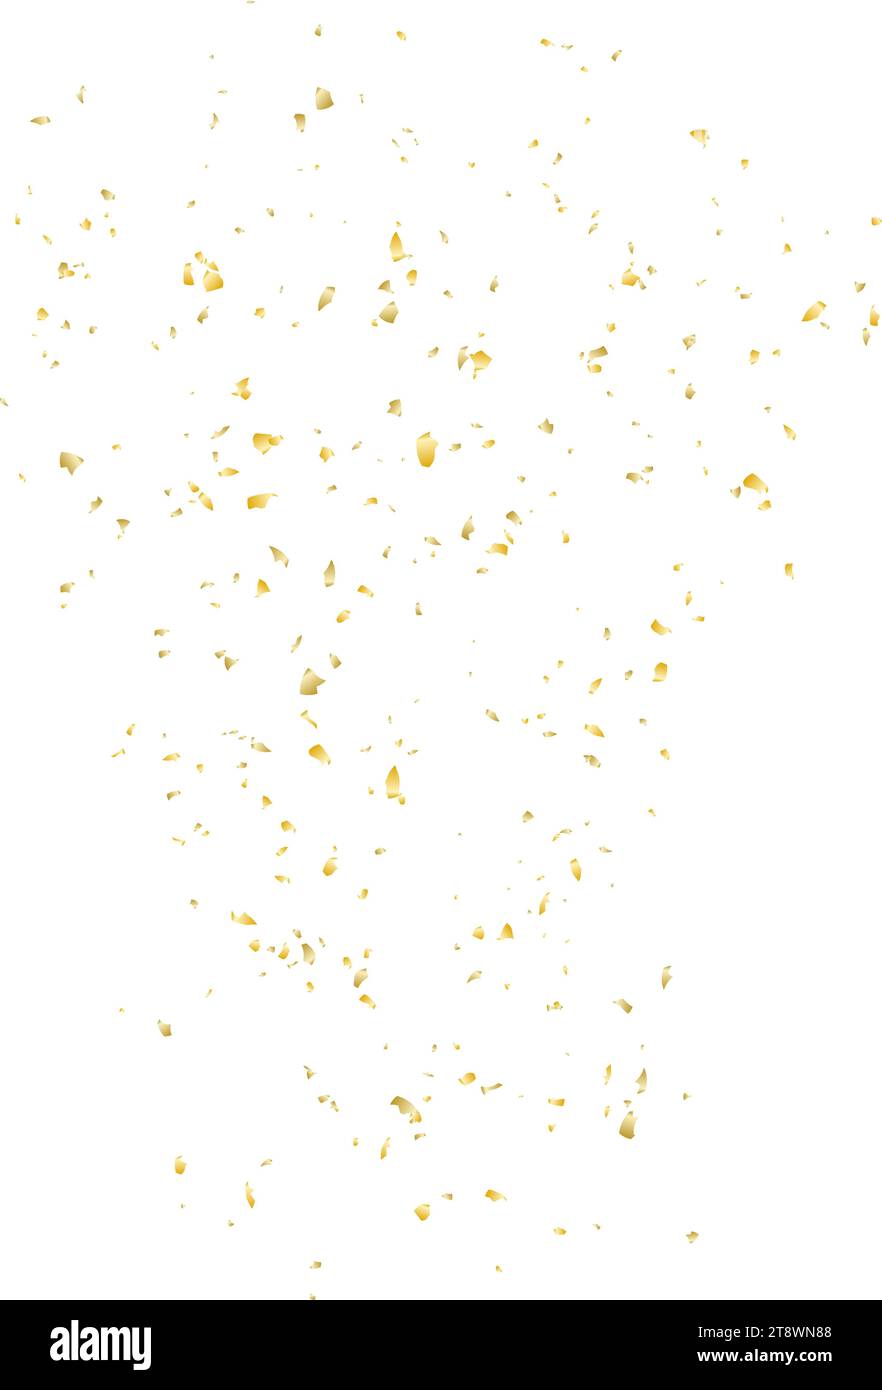 Festive golden confetti background. Vector illustration. Stock Vector